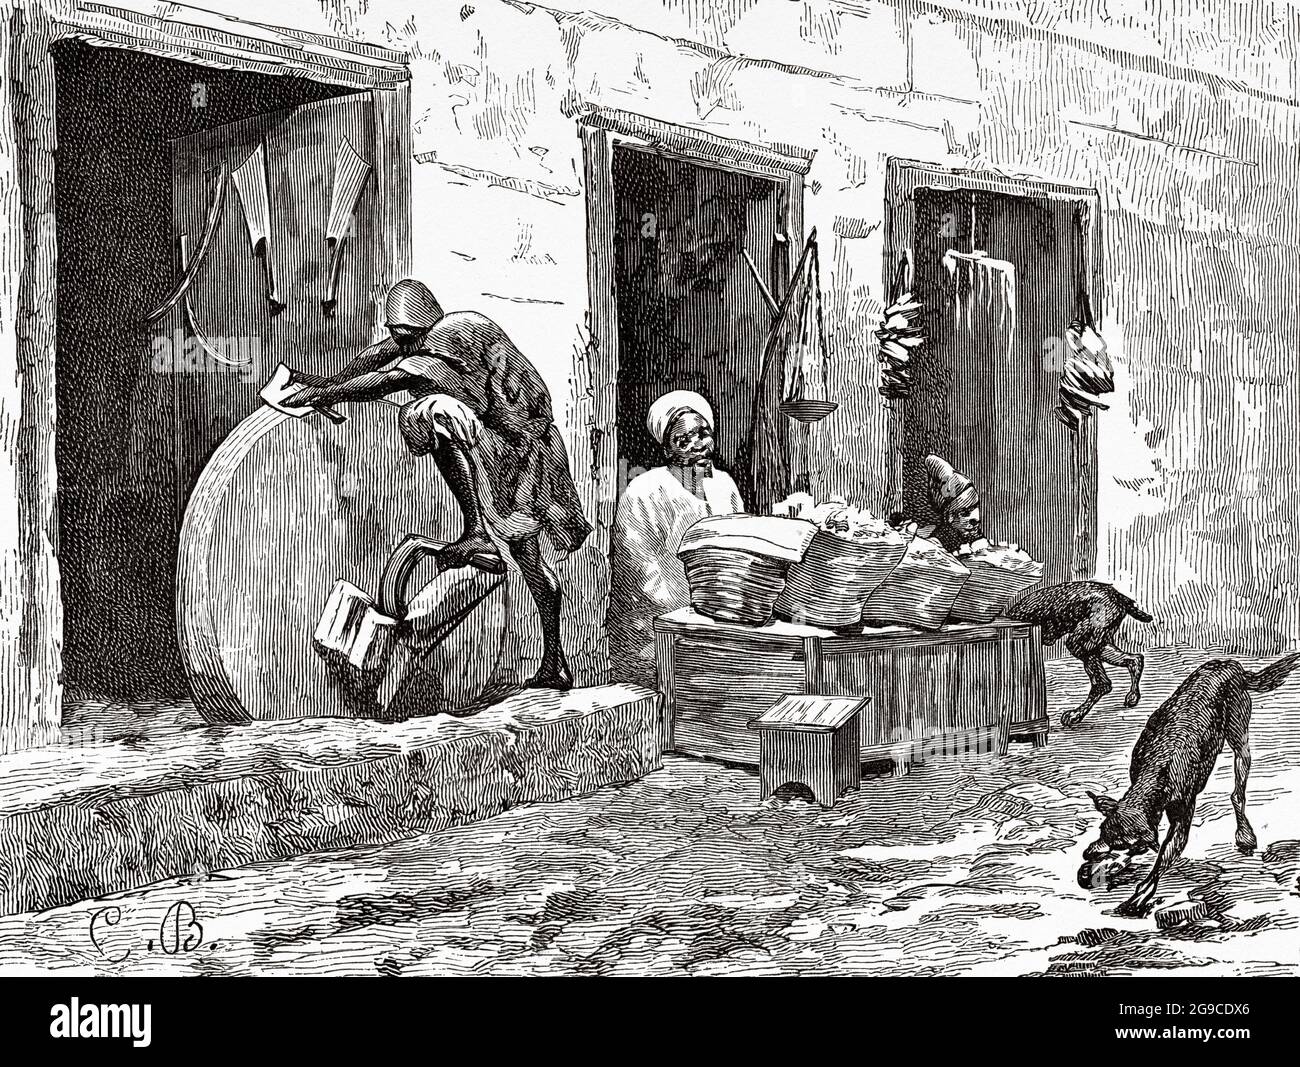 Knife Grinder, Souk Medina of Fez, Fes el Bali. Morocco, Maghreb. North Africa. Old 19th century engraved illustration from El Mundo Ilustrado 1879 Stock Photo